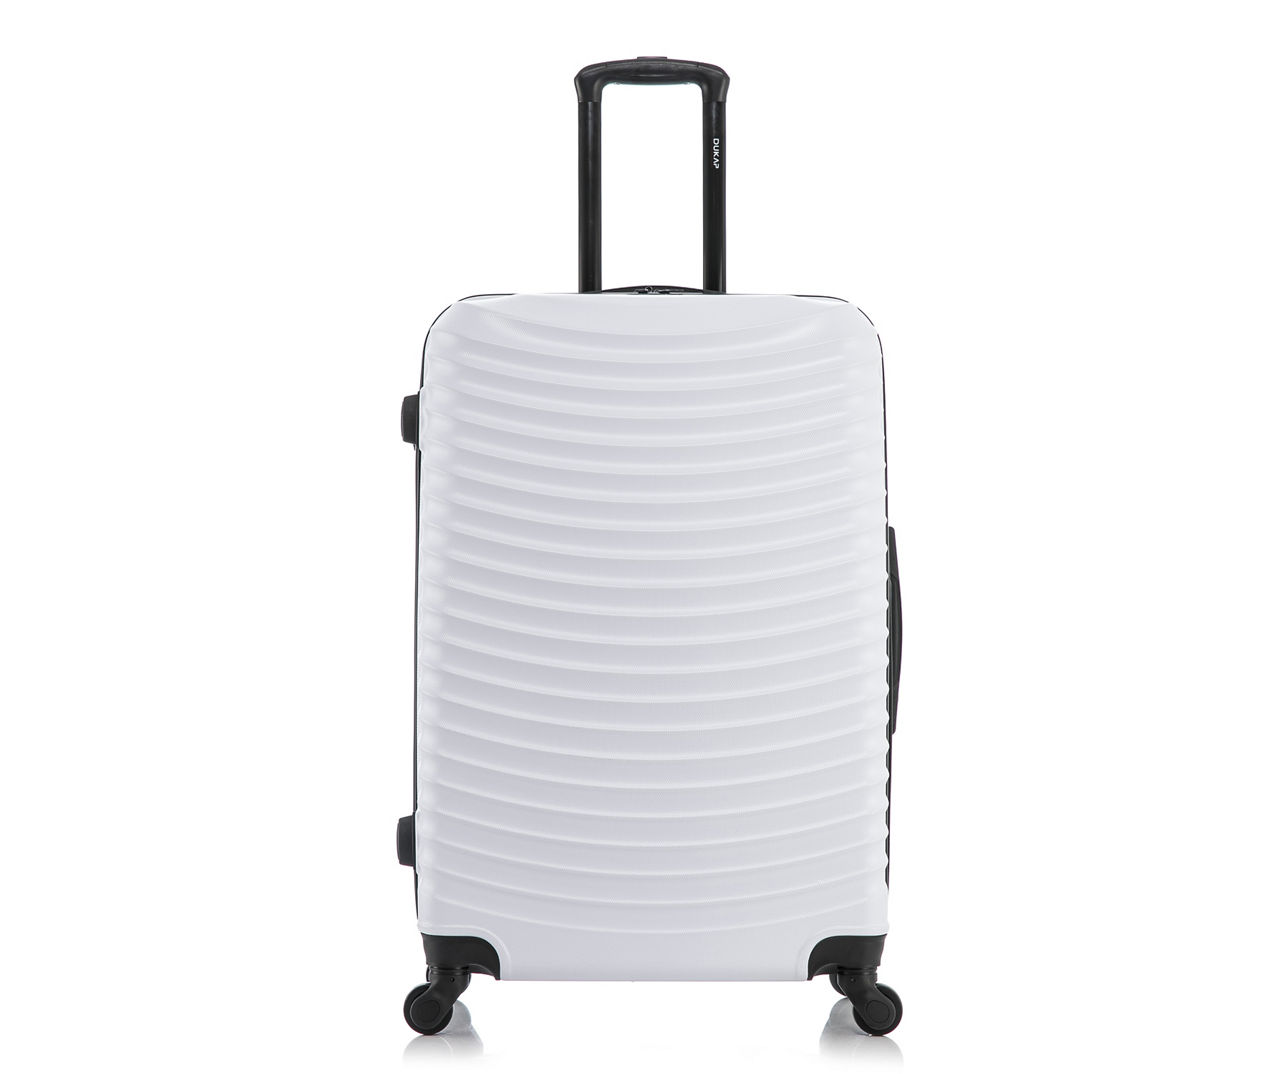 DUKAP Adly White 28" Curved-Ridge Hardside Spinner Suitcase